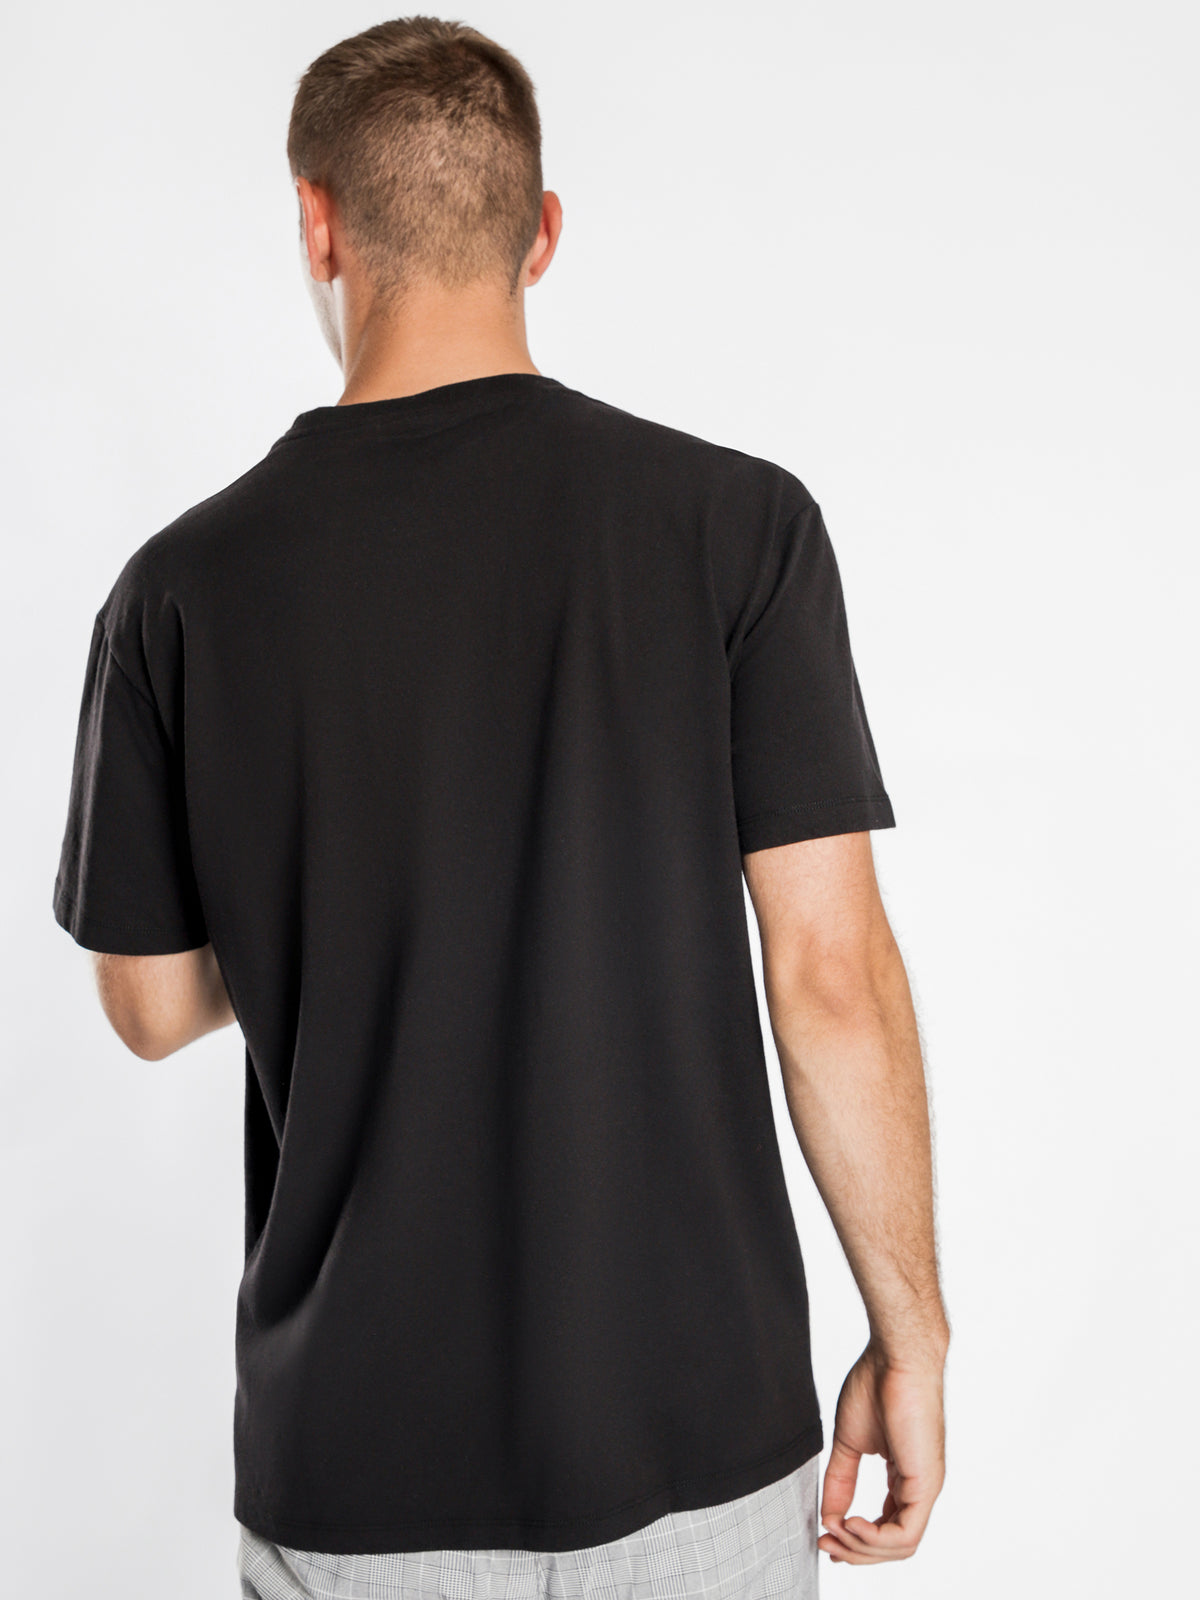 Sase Short Sleeve T-Shirt in Black